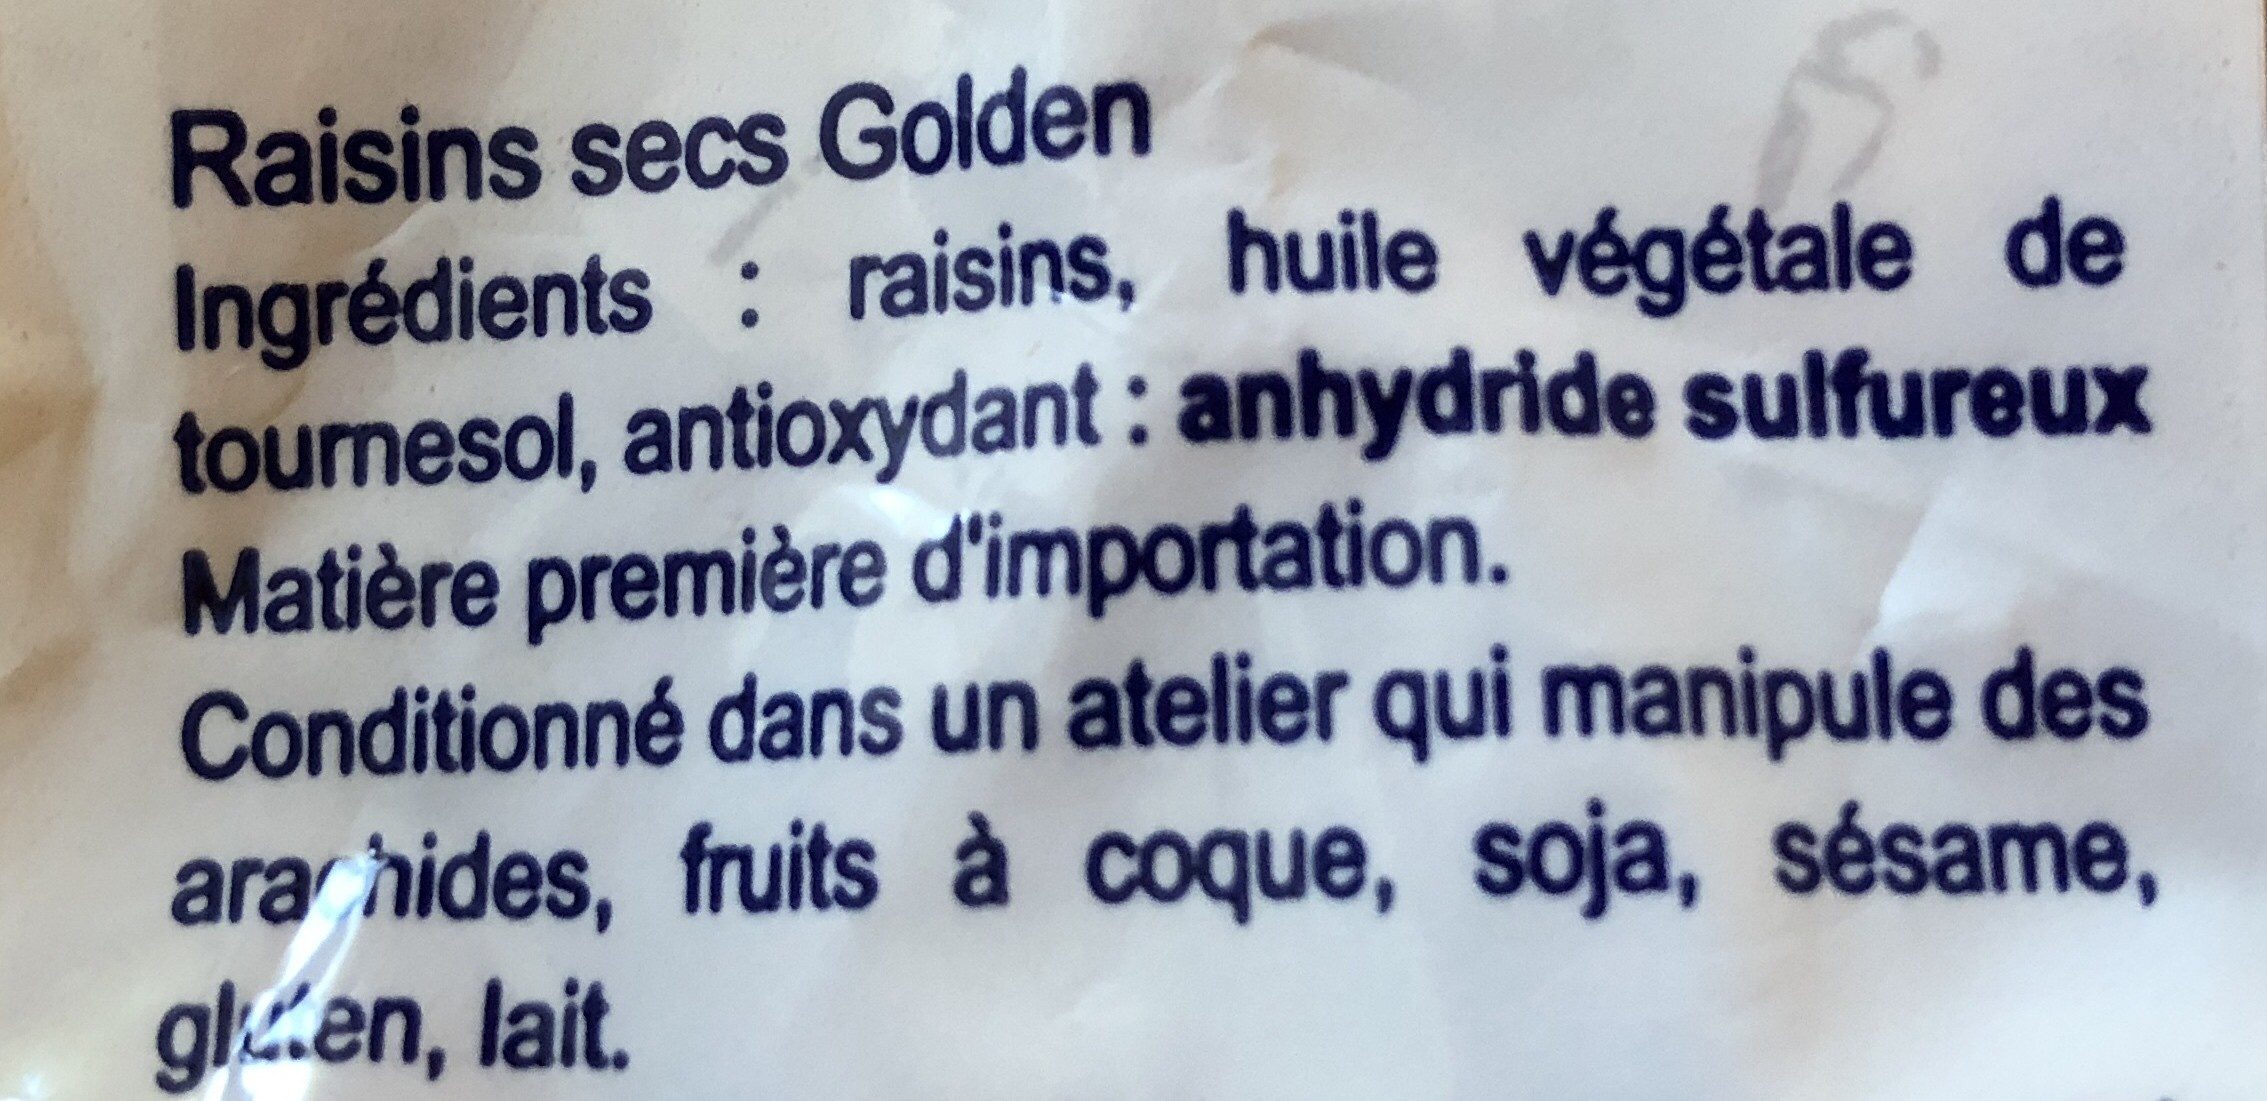 Raisins secs Golden - Ingredients - fr